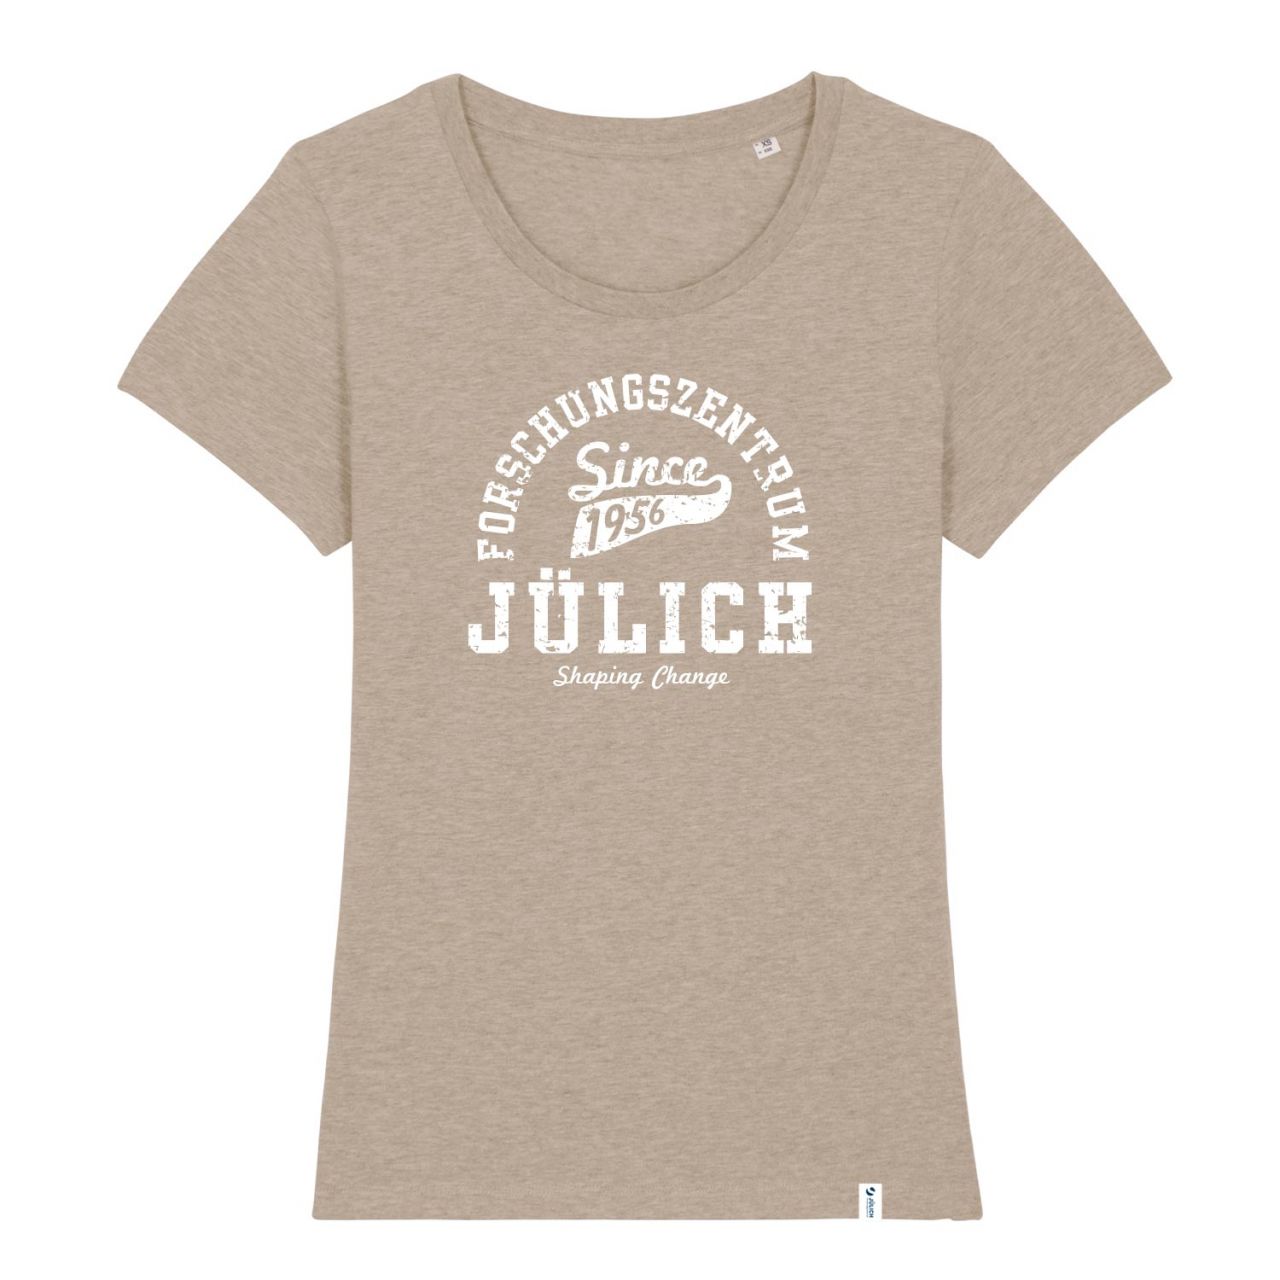 Women's Organic T-Shirt, heather sand, berkley